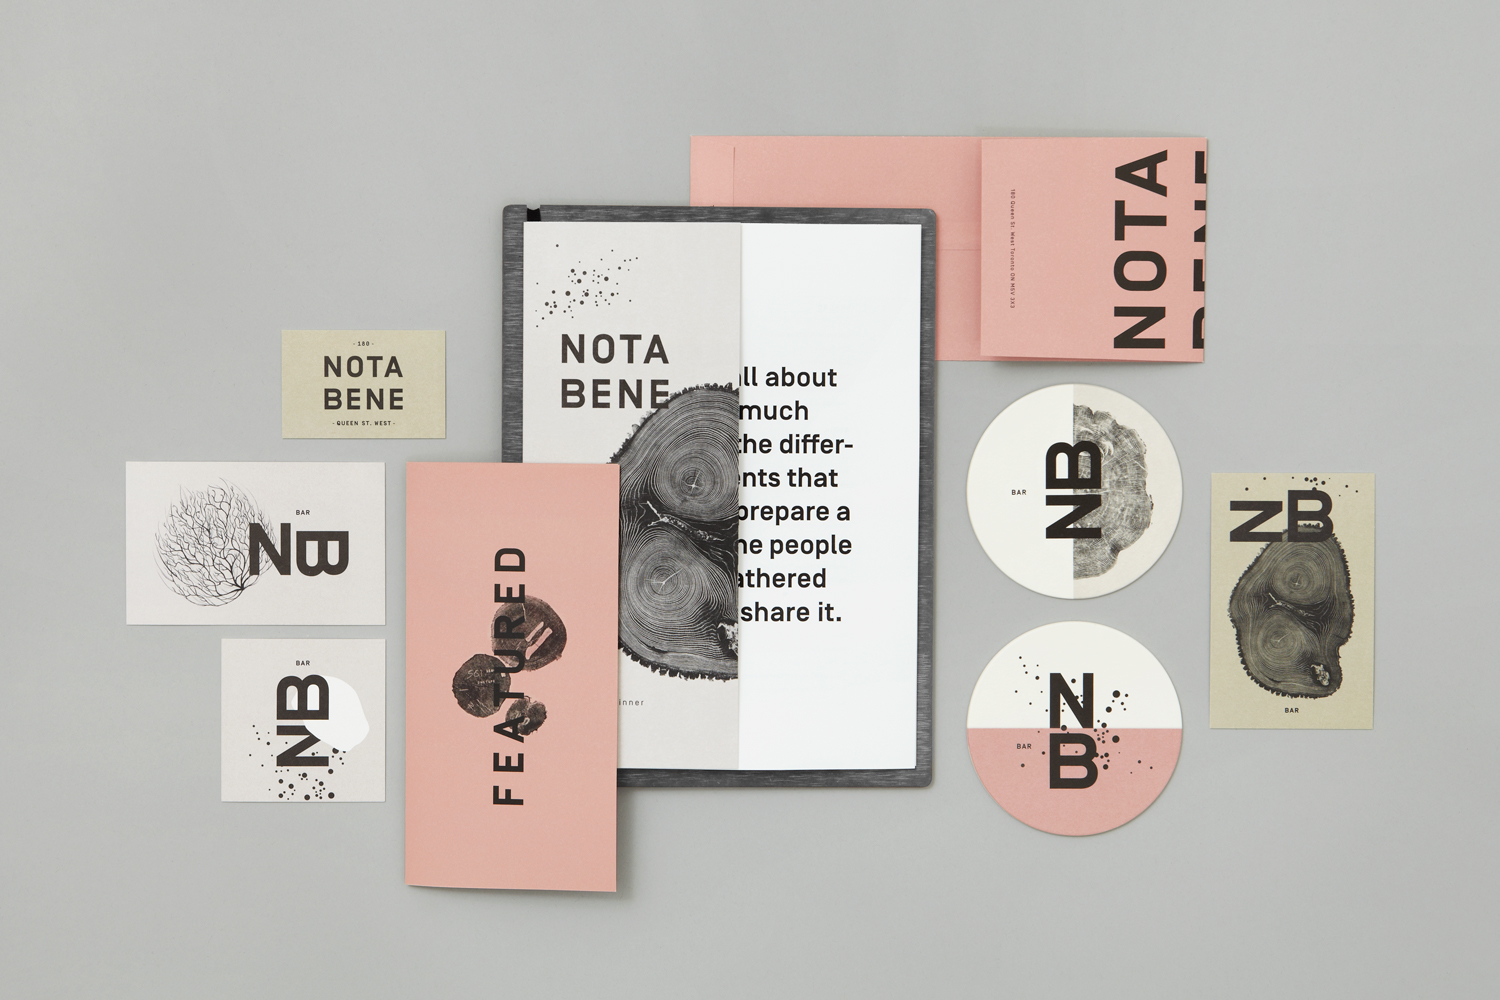 Brand identity, stationery, menus, postcards and business cards for Toronto restaurant Nota Bene by graphic design studio Blok, Canada